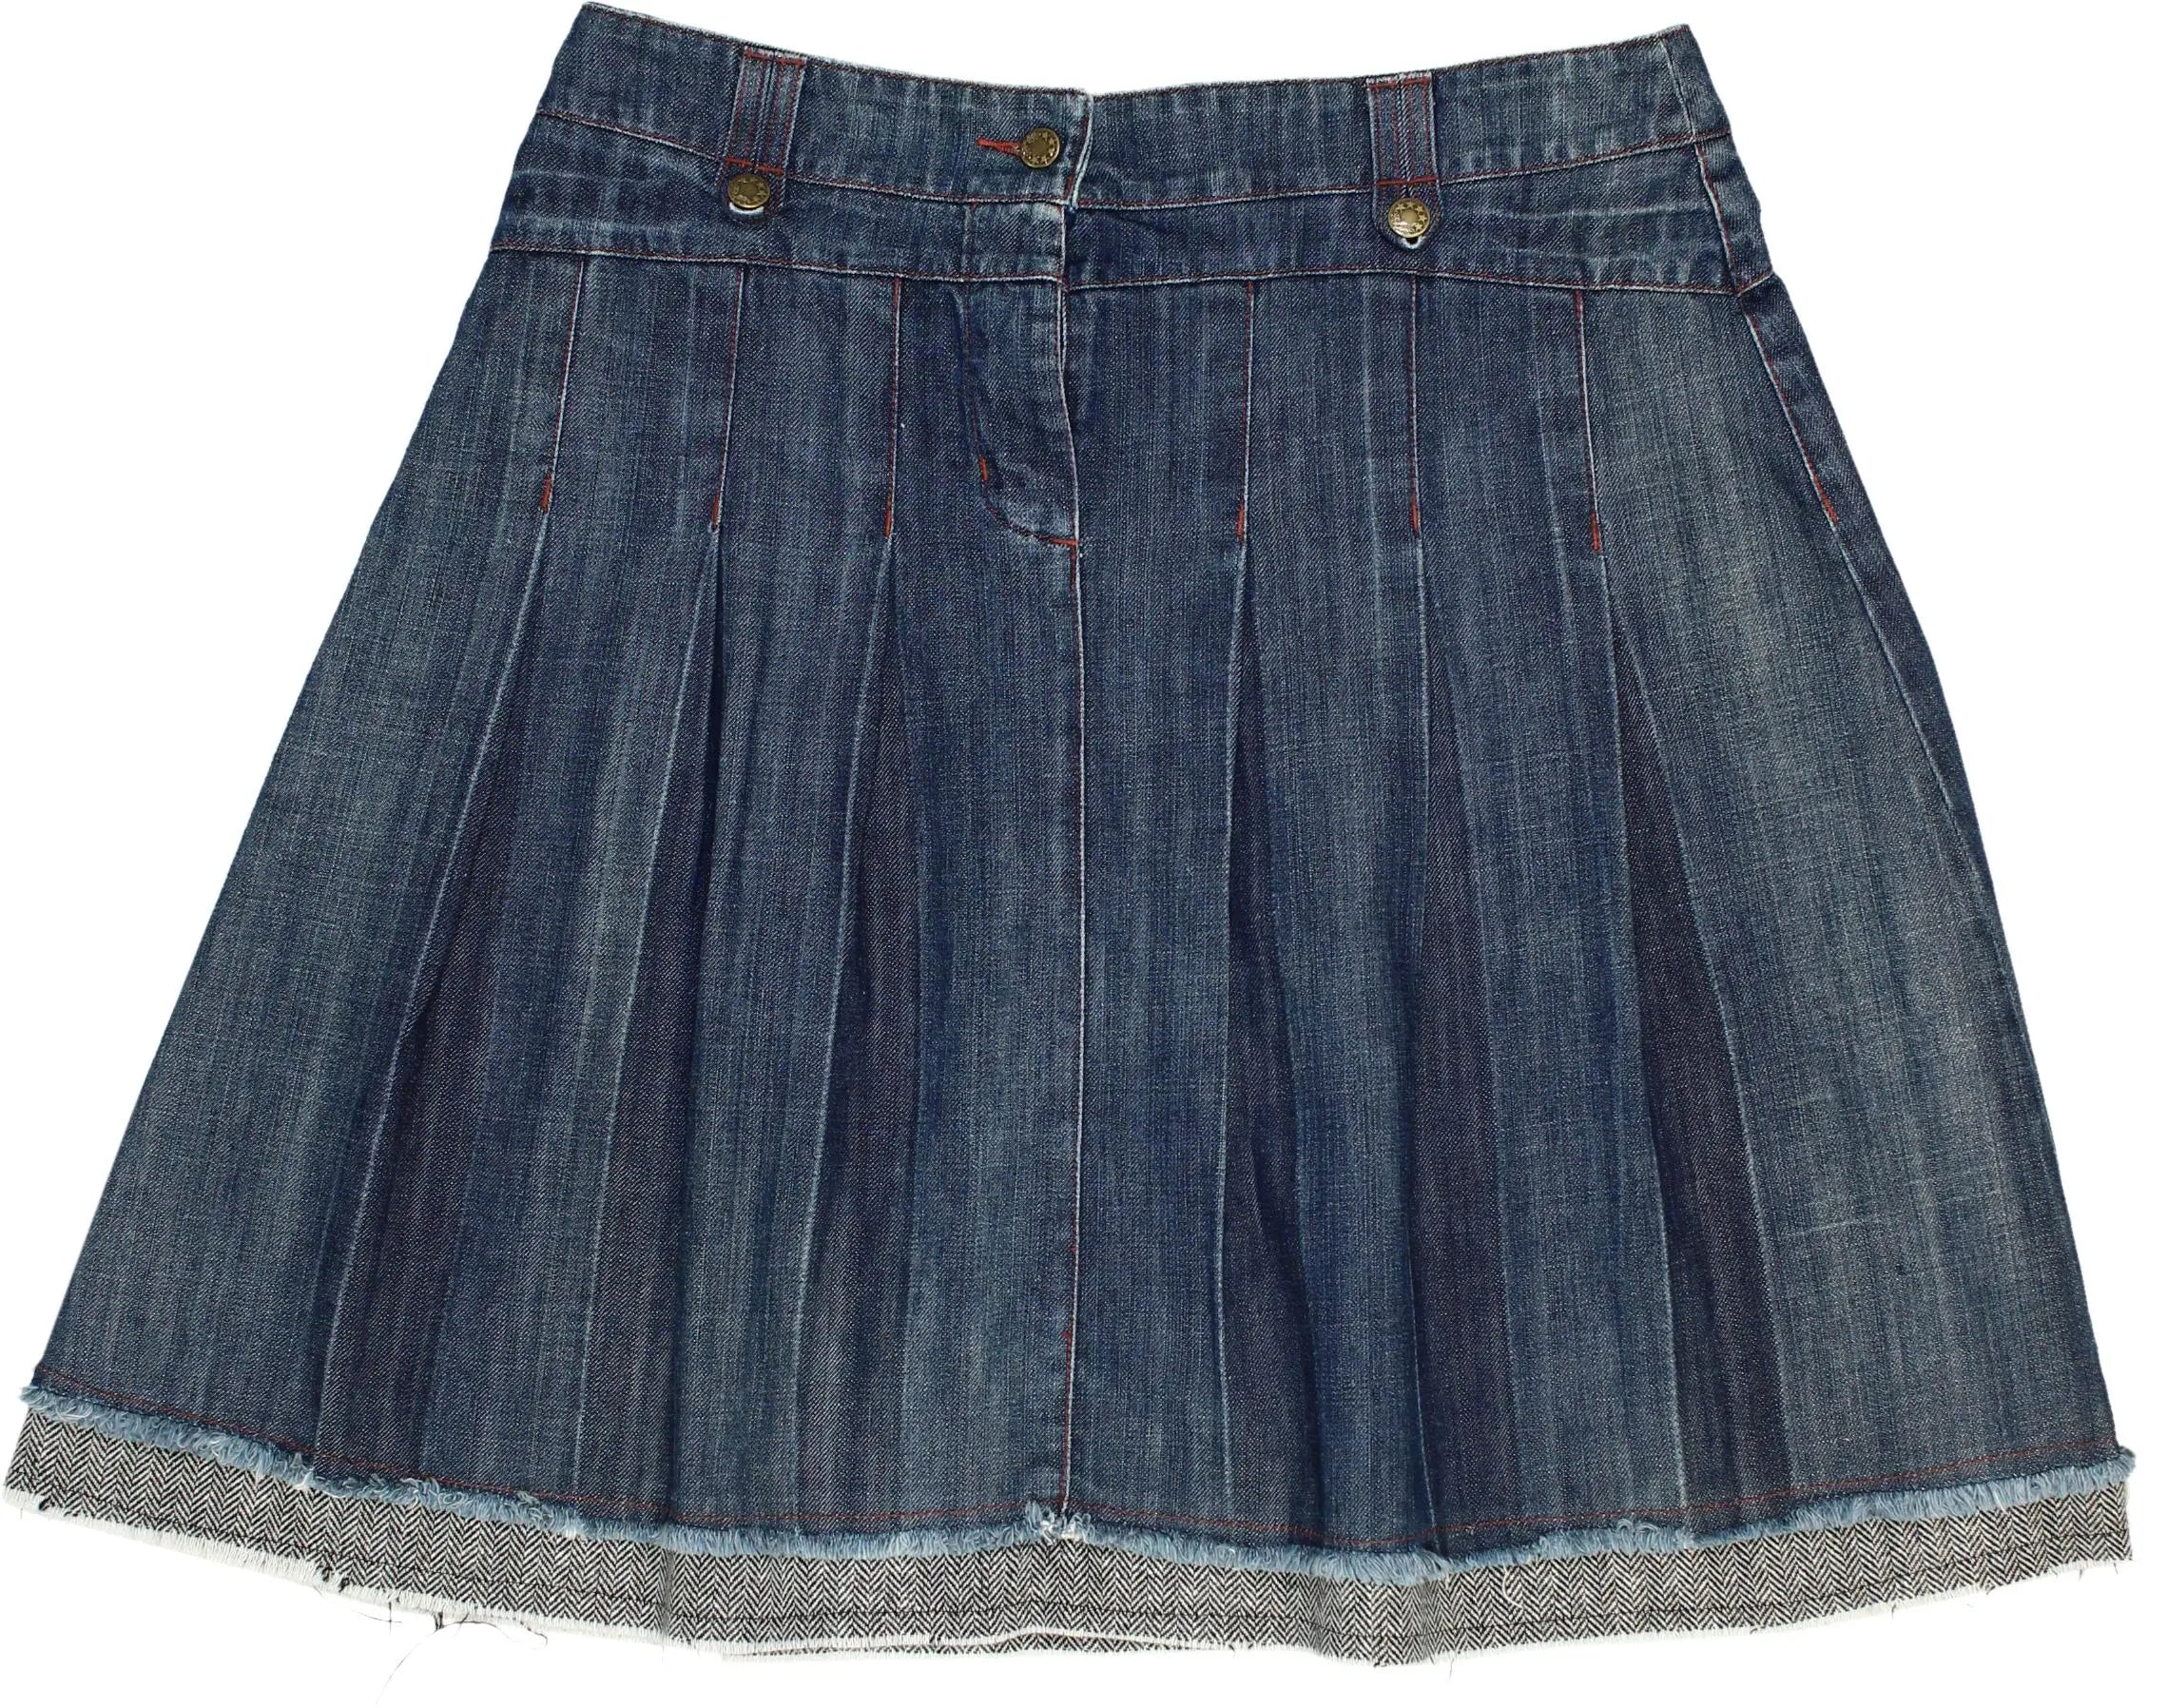 Côte Nord - Denim Skirt- ThriftTale.com - Vintage and second handclothing